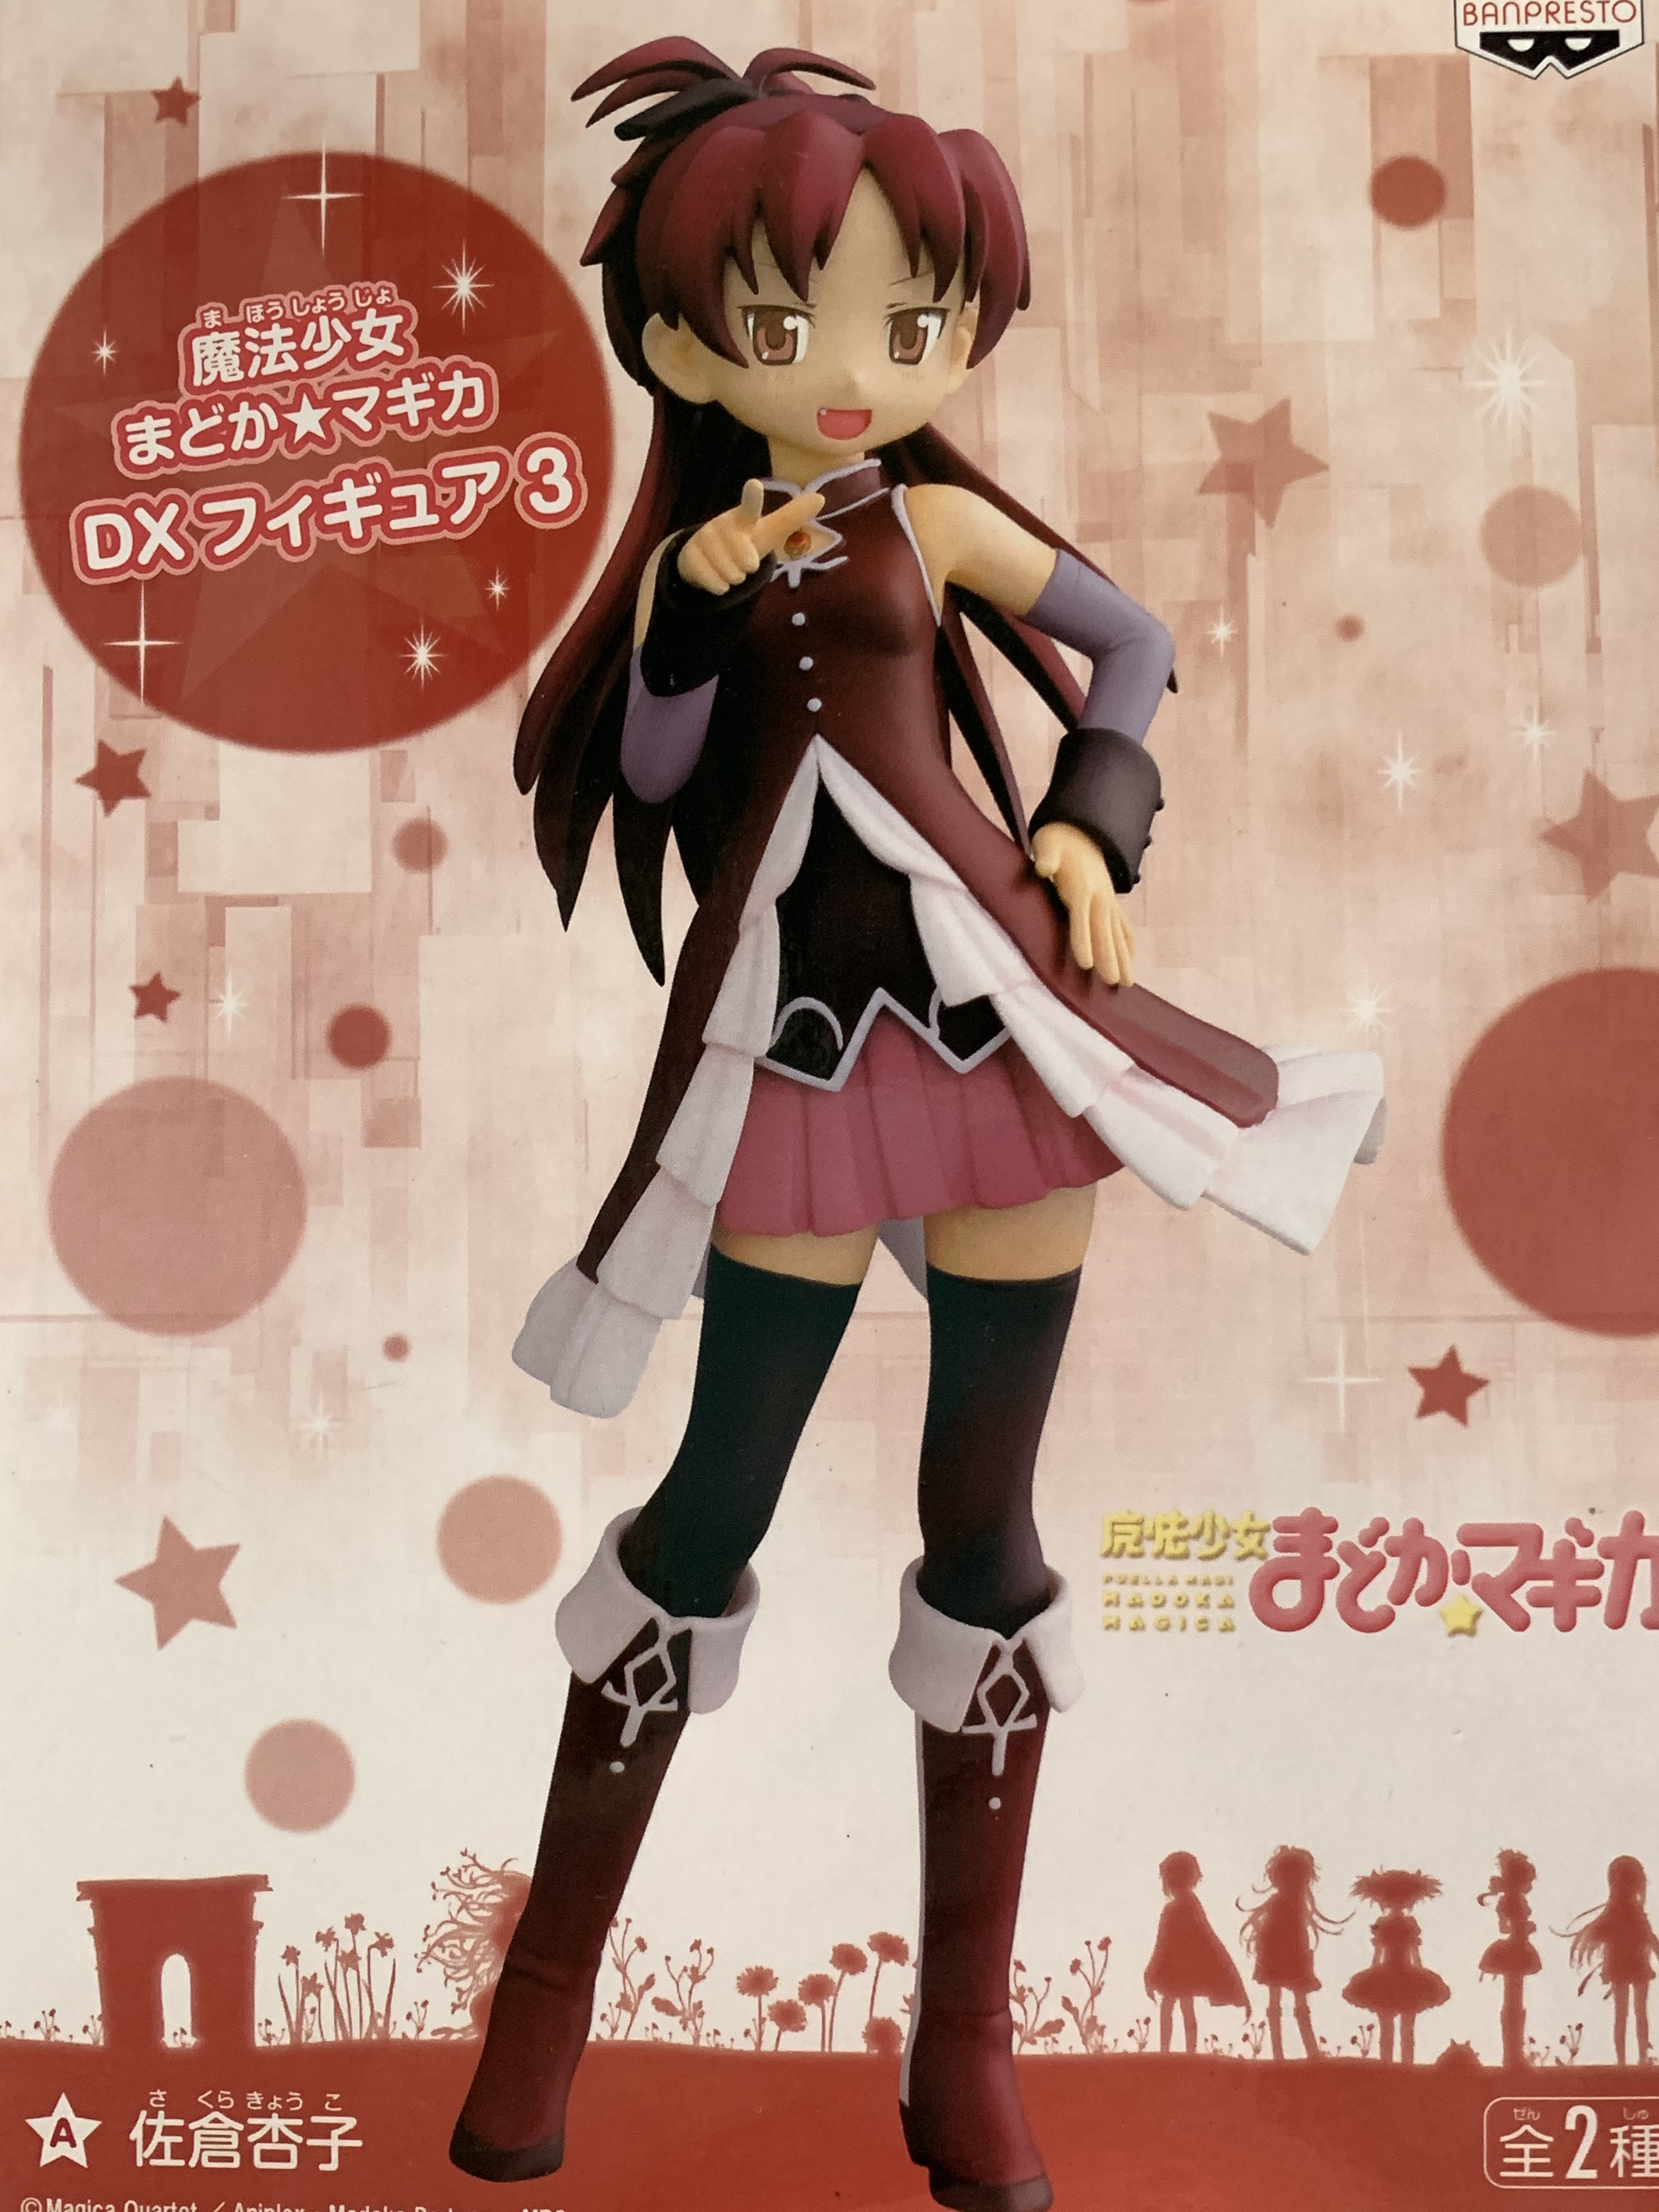 Kyoko Sakura, DX Figure Vol. 3, Puella Magi Madoka Magica, Banpresto